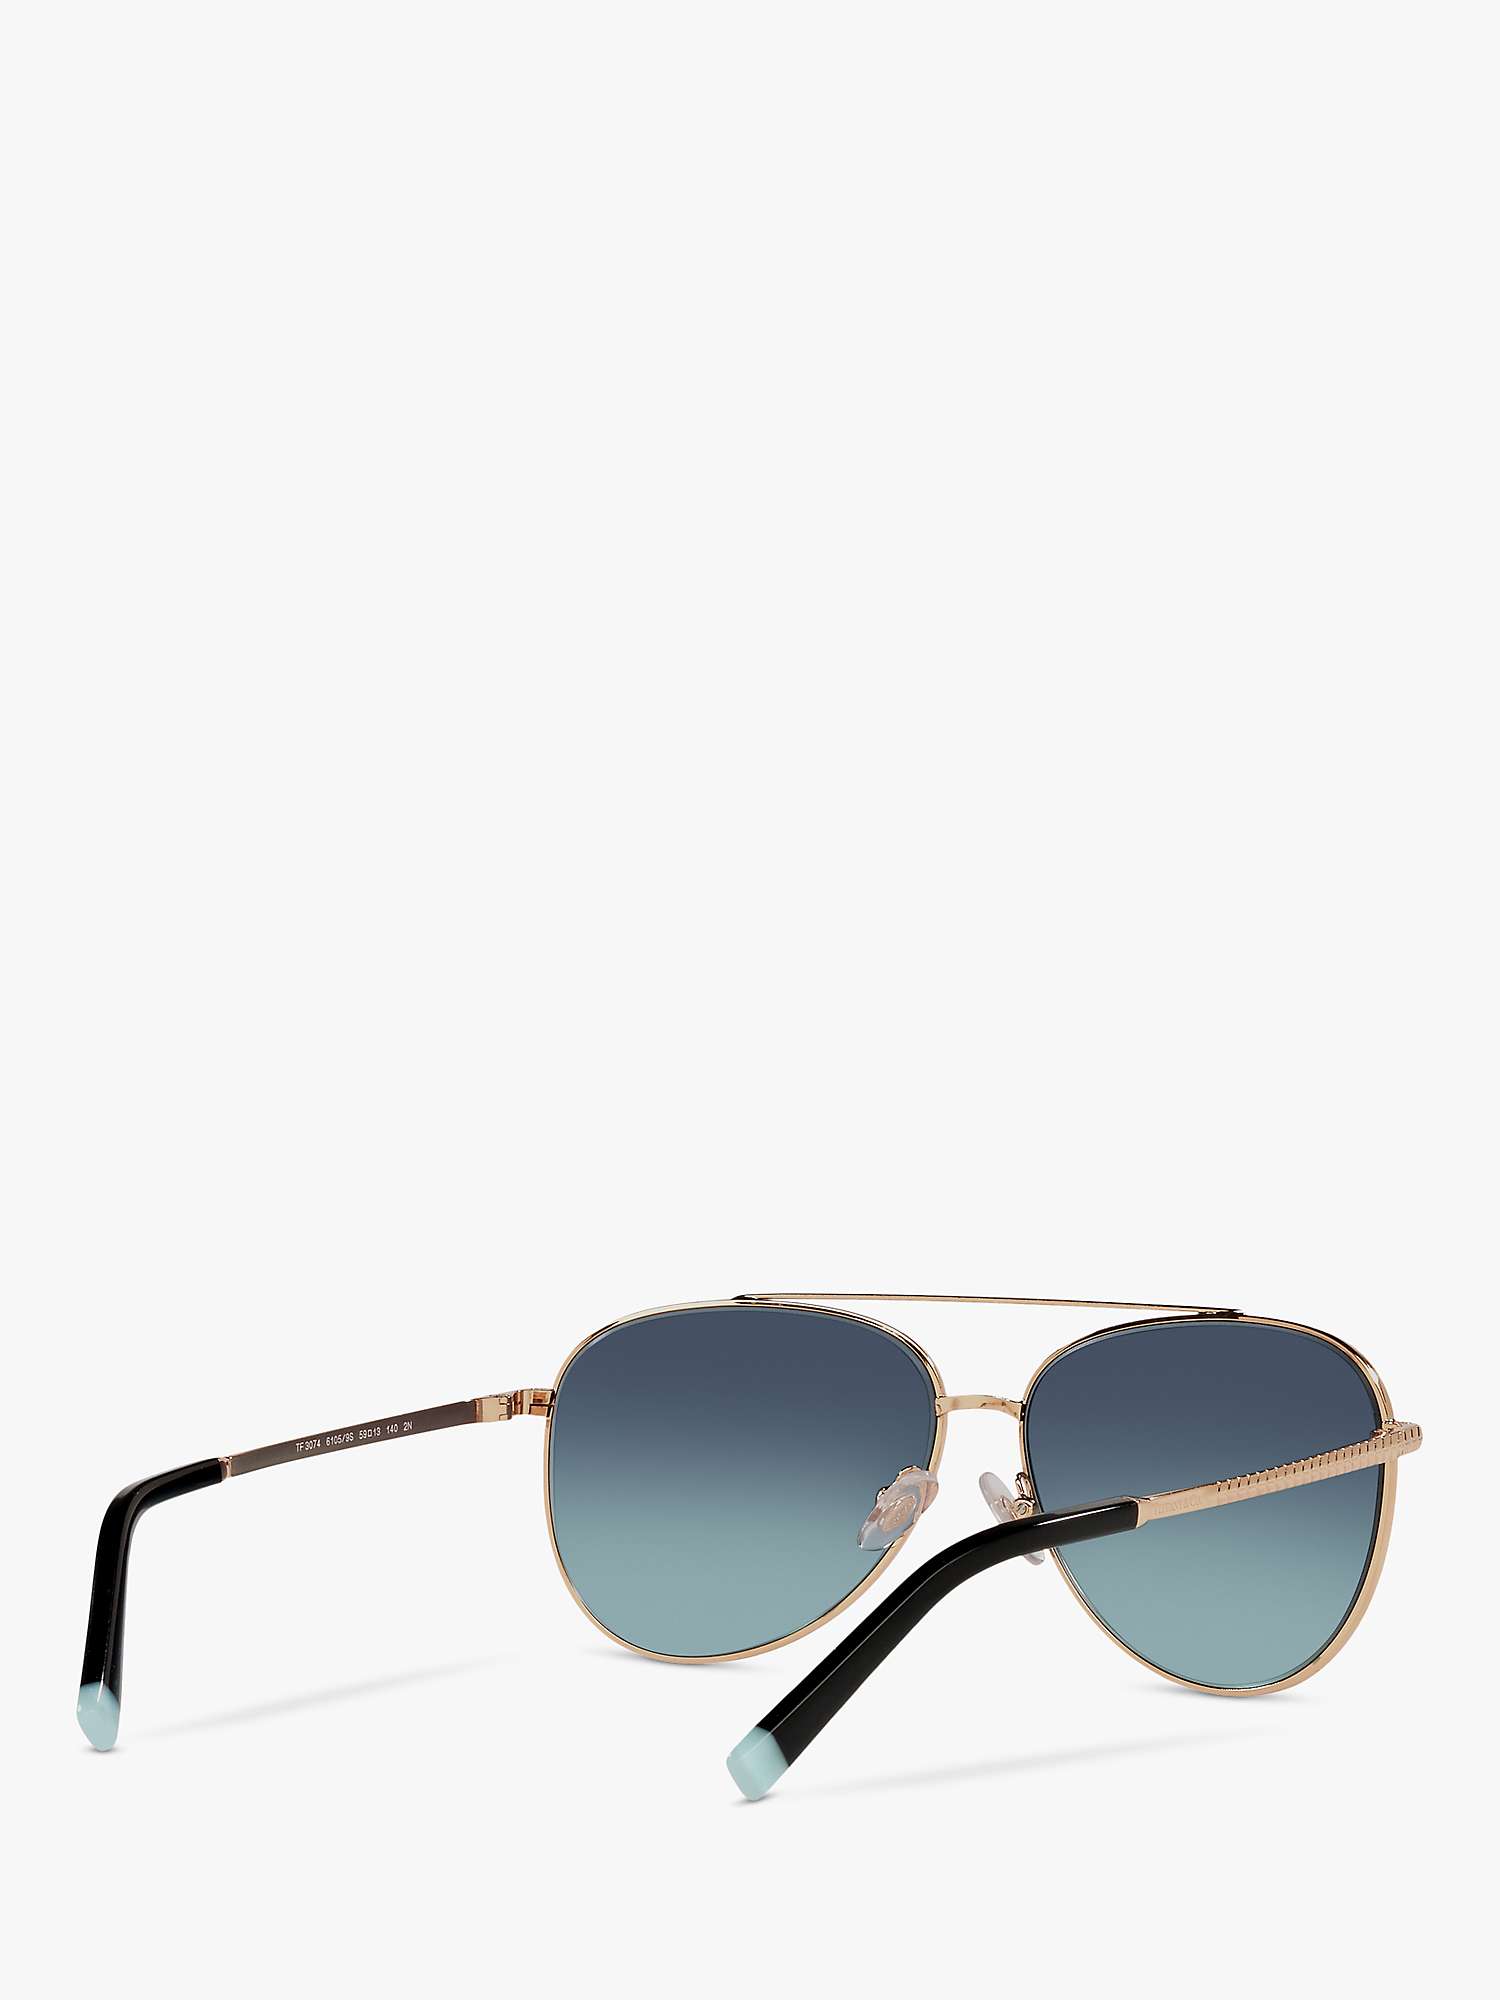 Buy Tiffany & Co TF3074 Women's Aviator Sunglasses, Gold/Blue Gradient Online at johnlewis.com